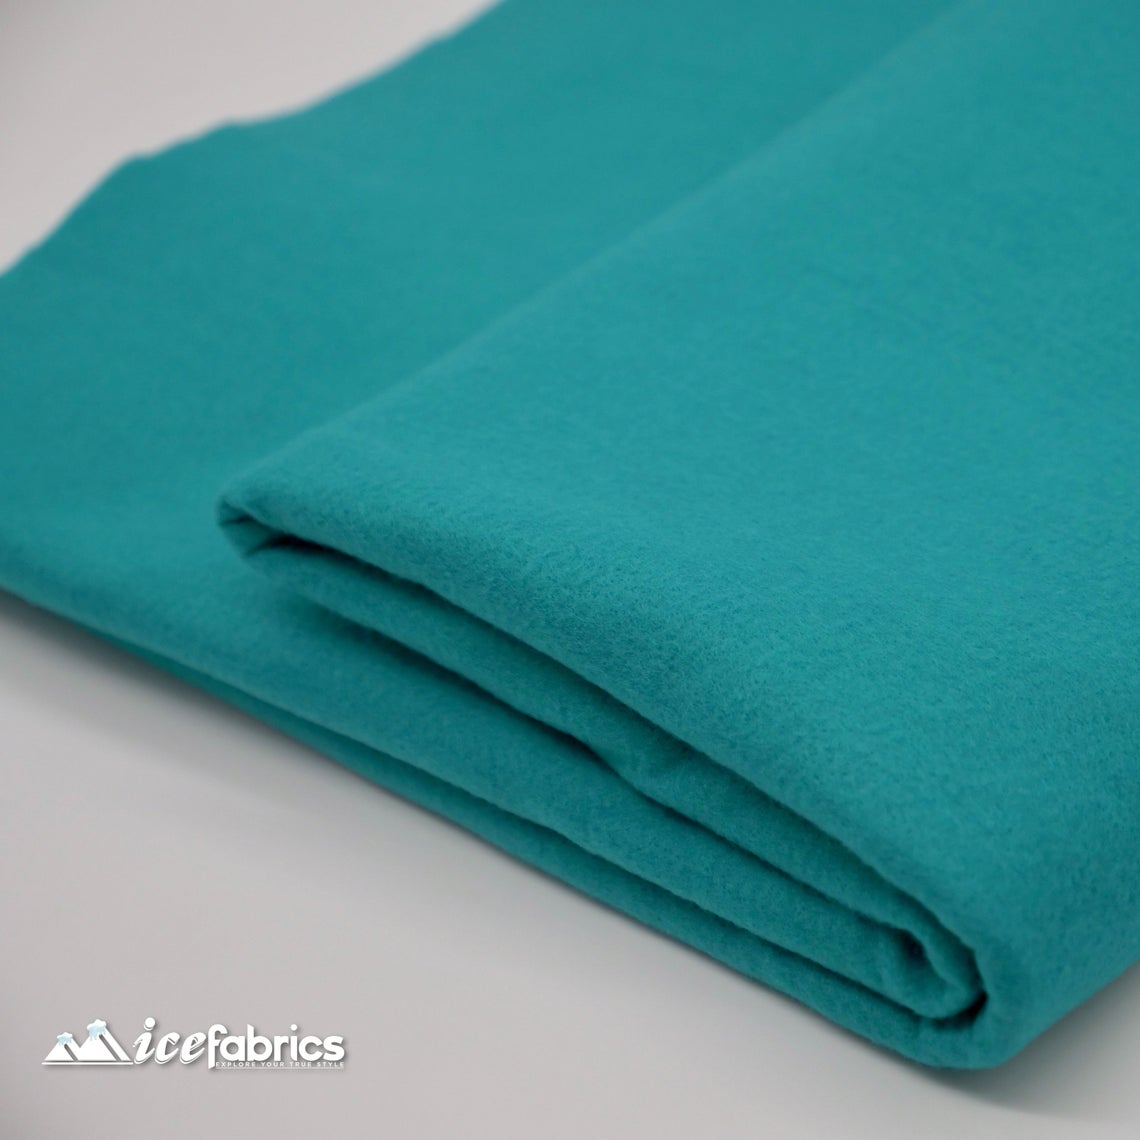 Acrylic Felt Fabric By The Roll | 20 yards | Wholesale Fabric ICE FABRICS Turquoise